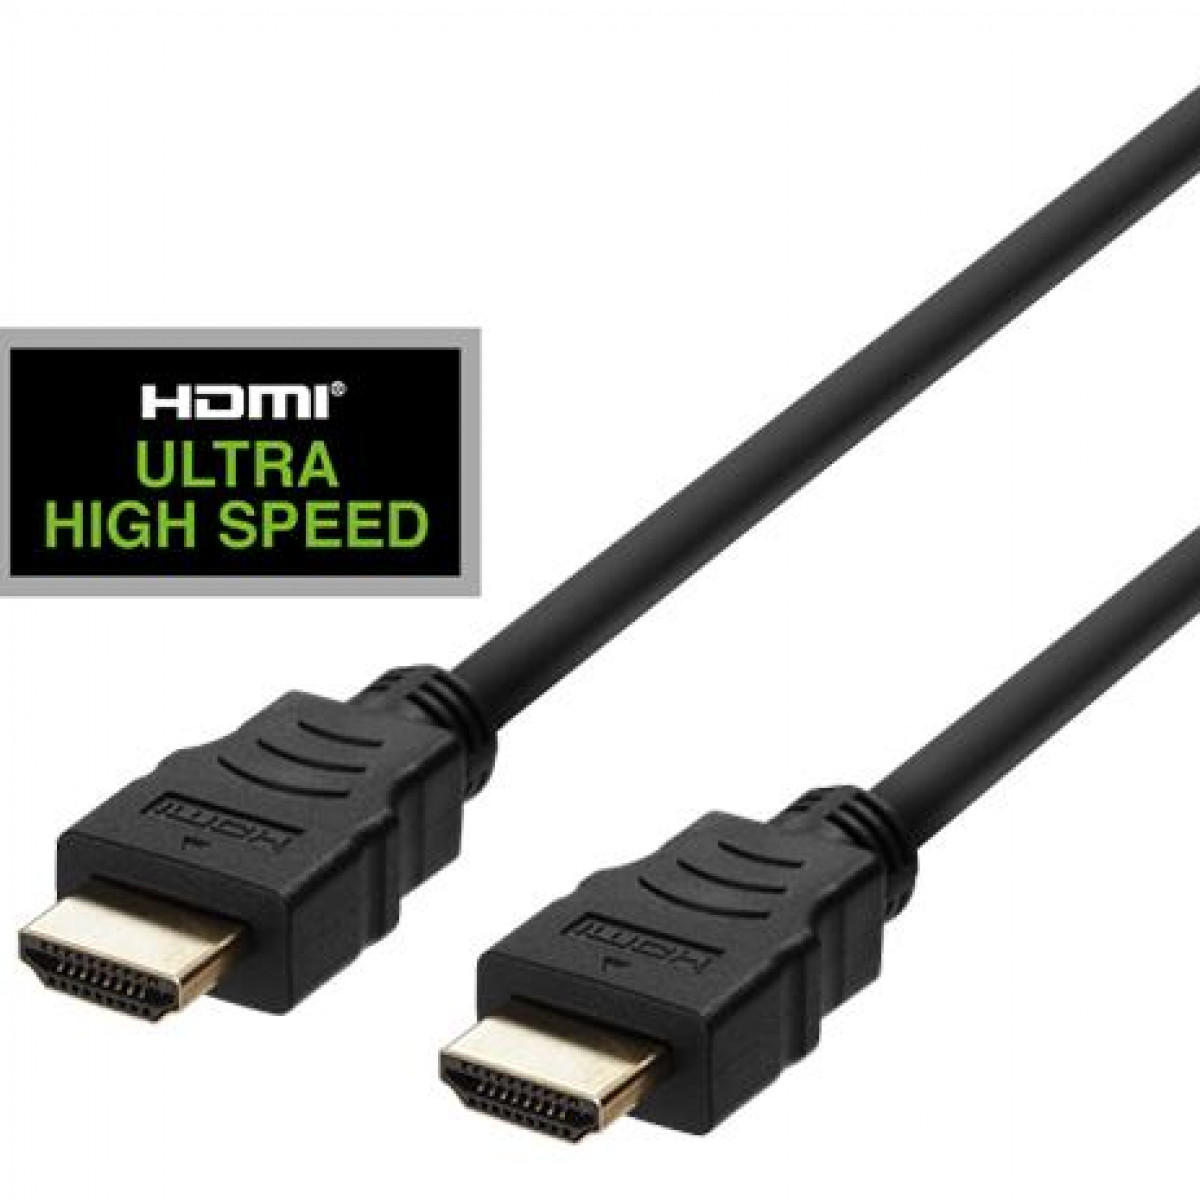 DELTACO DELTACO ULTRA HDMI-Kabel, High 1m, HDMI-Kabel Speed schwarz 48Gbps